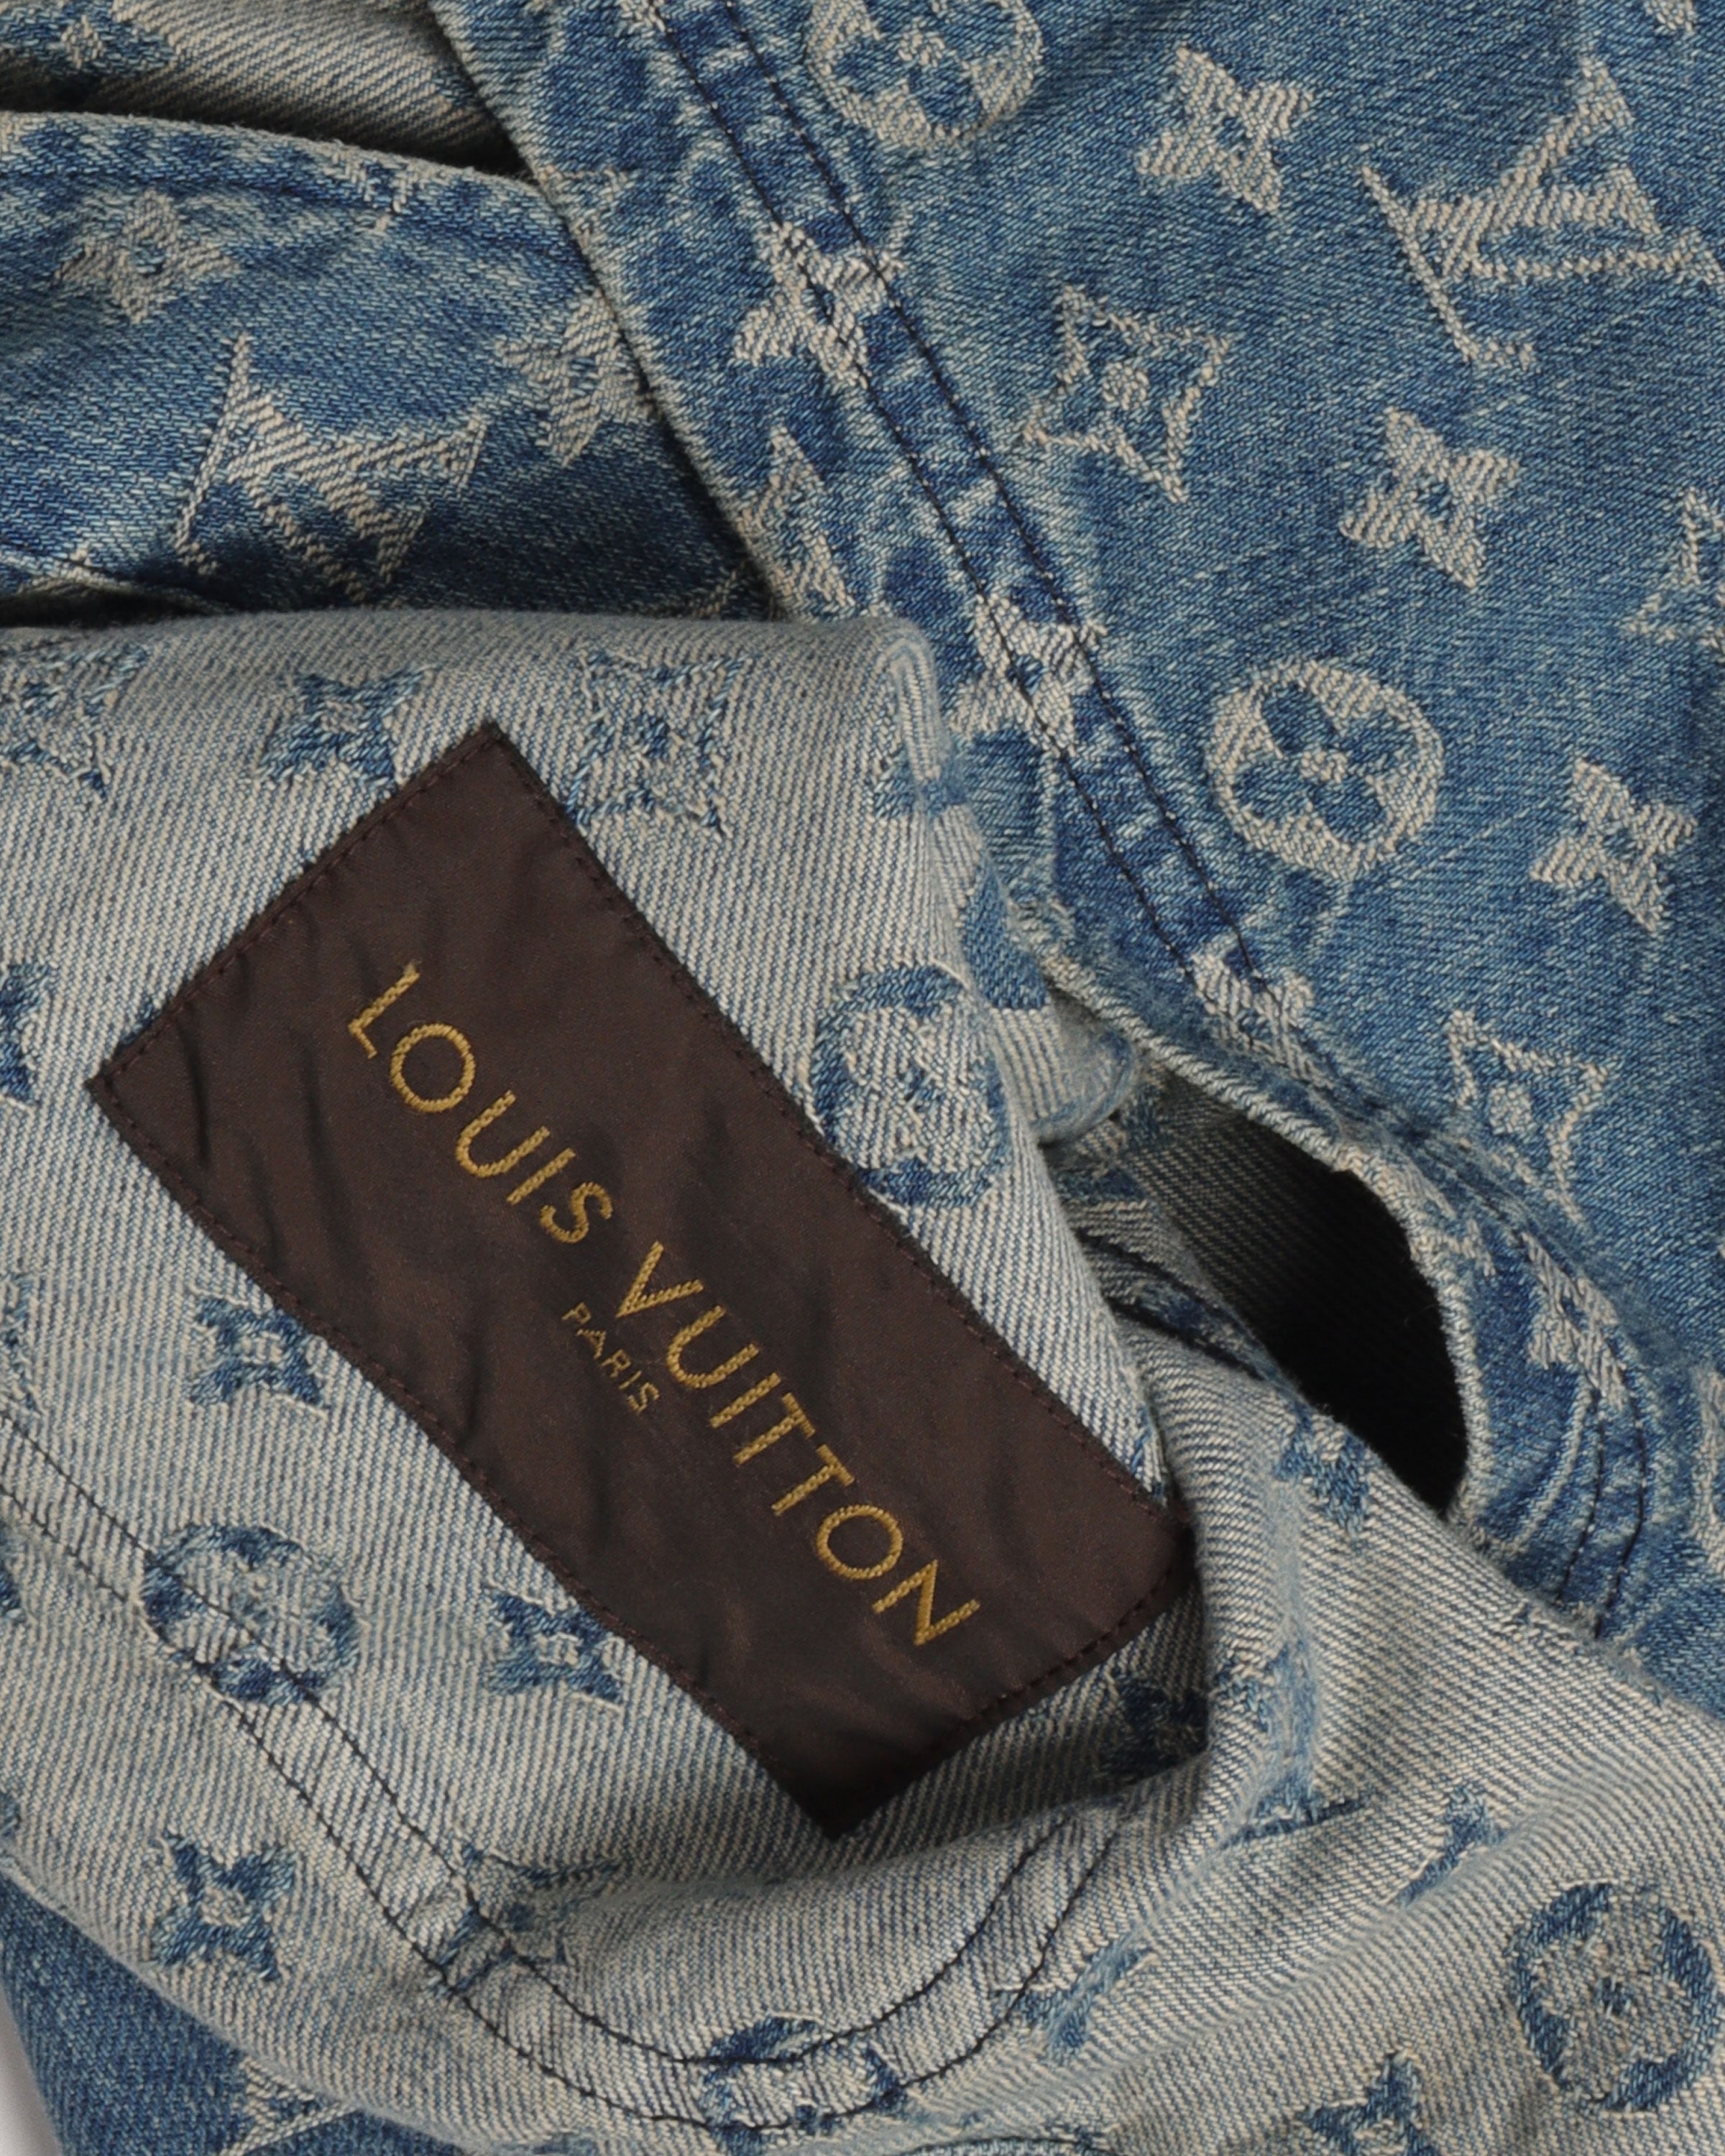 Louis Vuitton Supreme Jacquard Denim Chore Coat